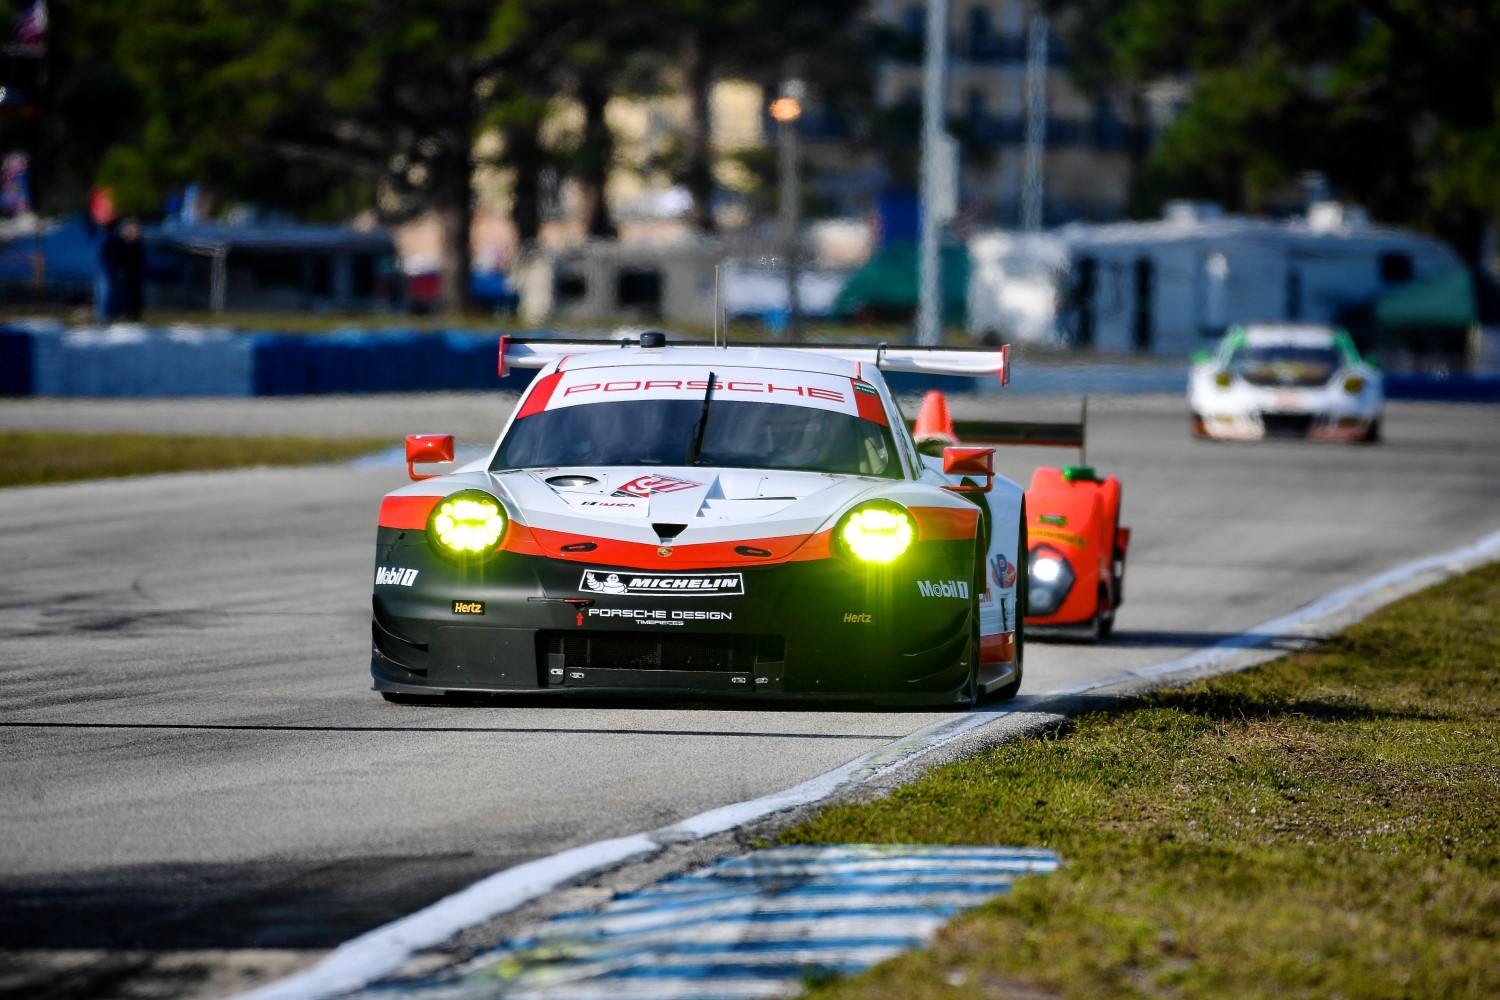 God (IMSA) has given Porsche a performance boost